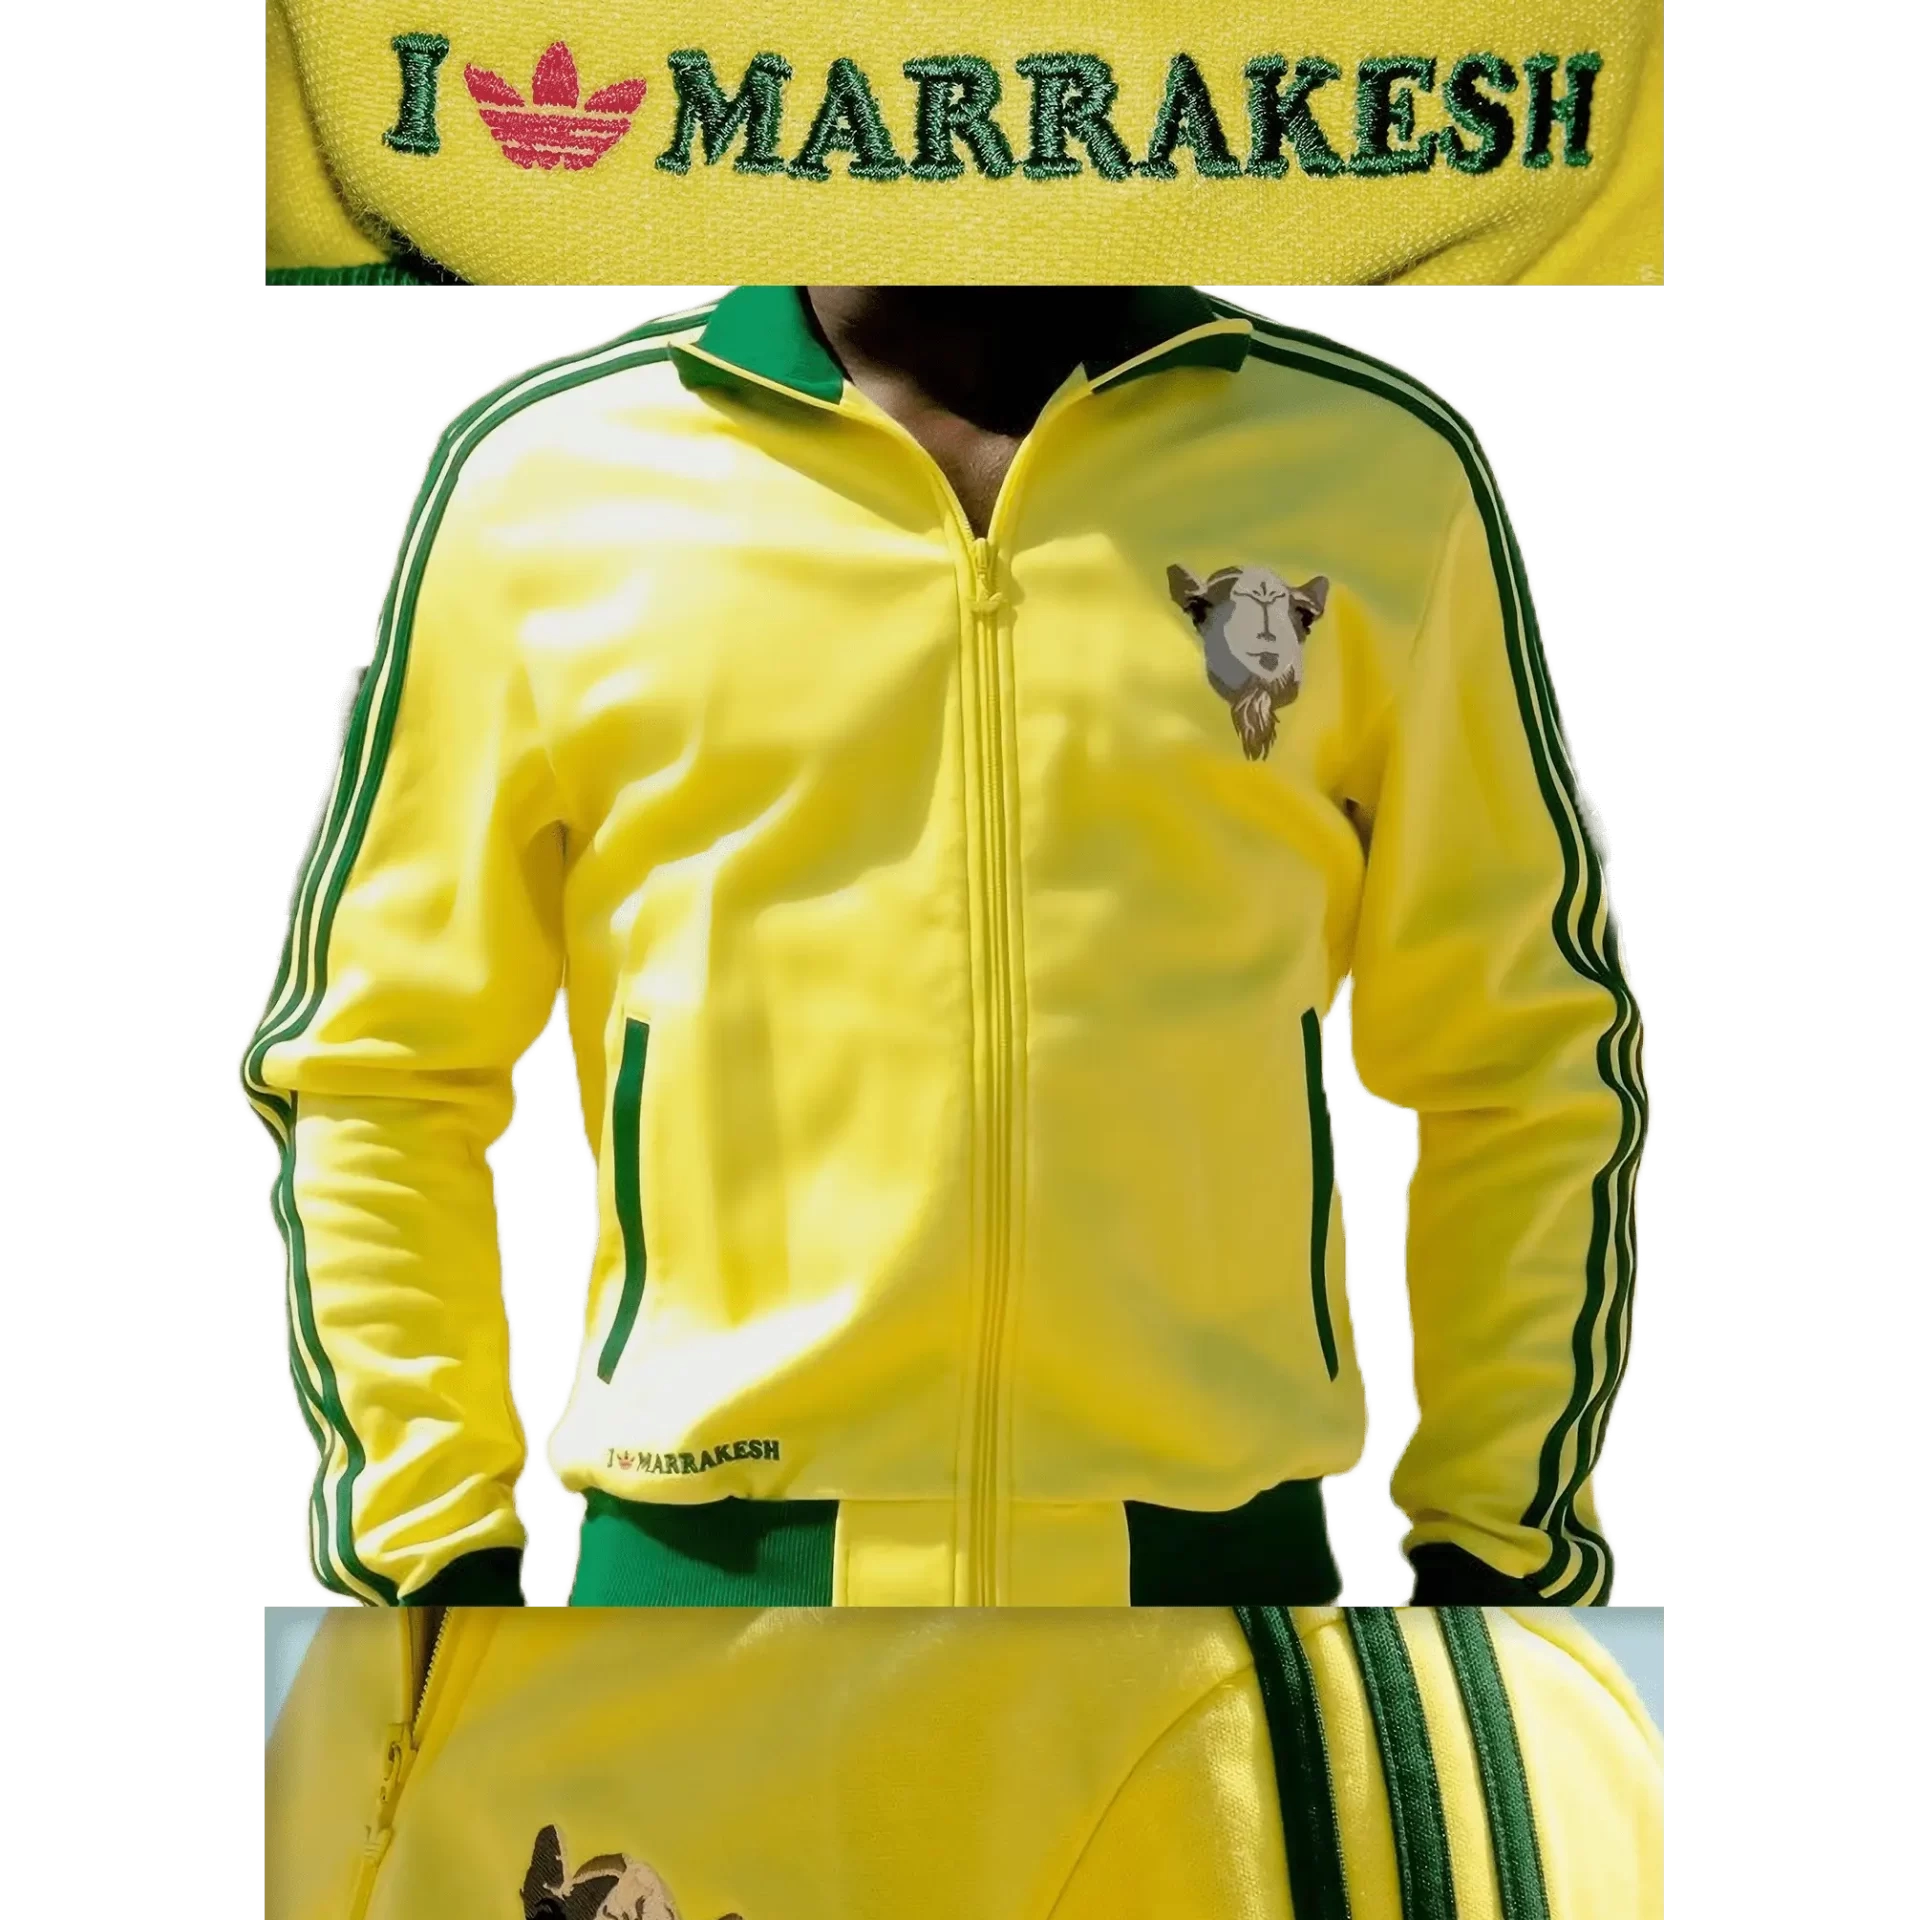 Men's 2007 Marrakech Track Top by Adidas Originals: Frugal (EnLawded.com file #lmchk58817ip2y123333kg9st)